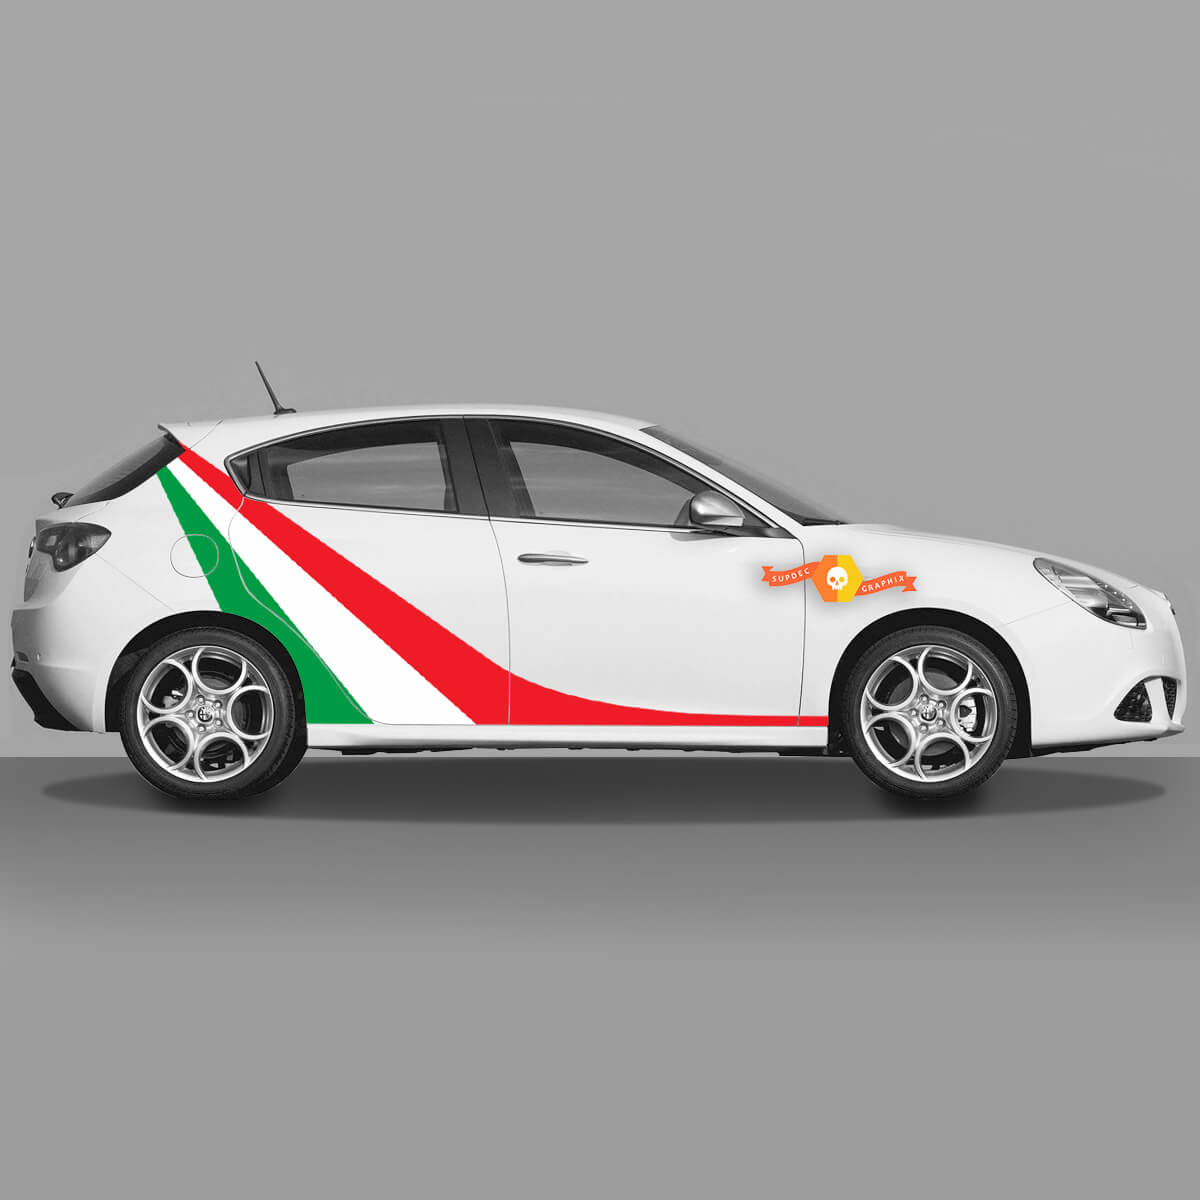 2x Default Italian Flag Colors Doors Decal fits Alfa Romeo Giulietta decals Vinyl Graphics Extended 2021